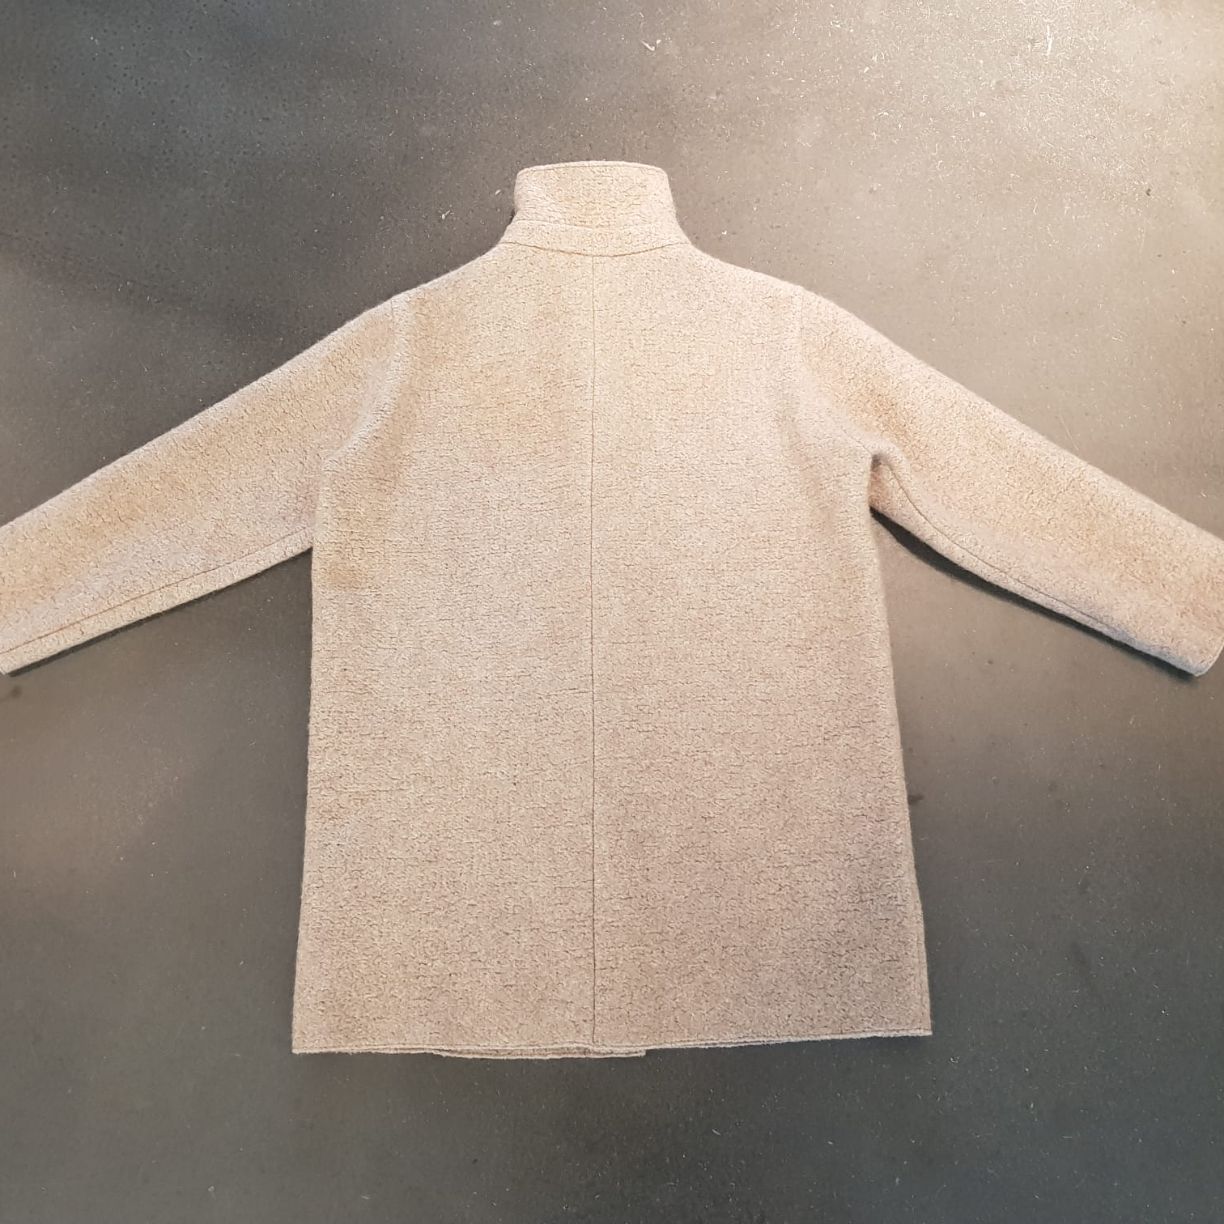 DONNA Les Boutiques - Coat special sheepskin like knit 12pl cashmere